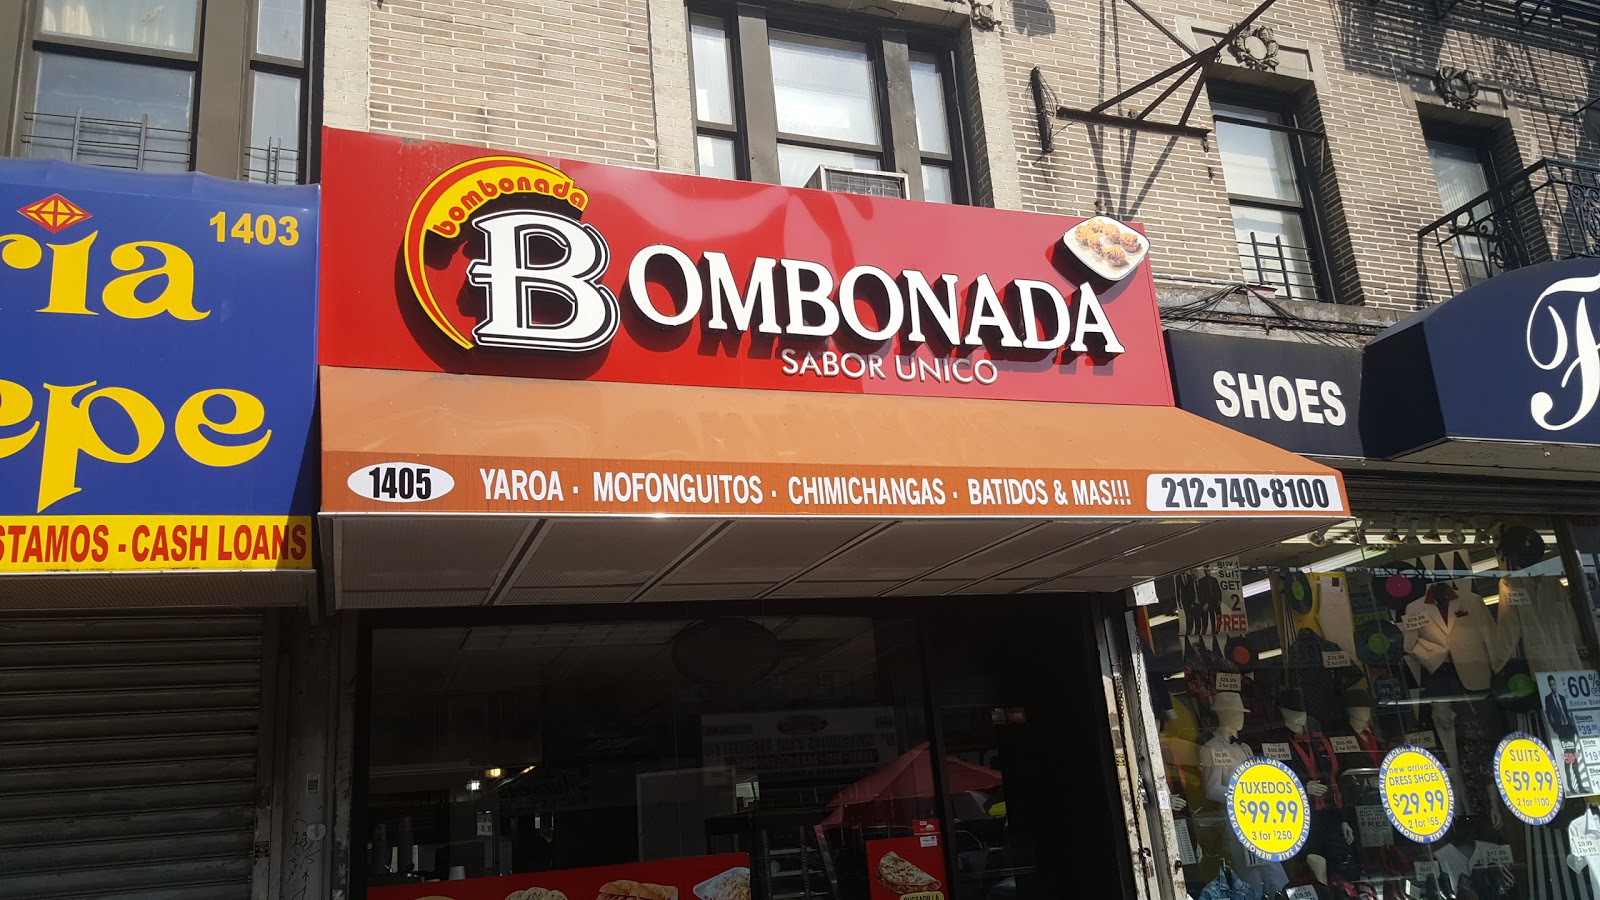 Photo of Bombonada 181 St in New York City, New York, United States - 1 Picture of Restaurant, Food, Point of interest, Establishment